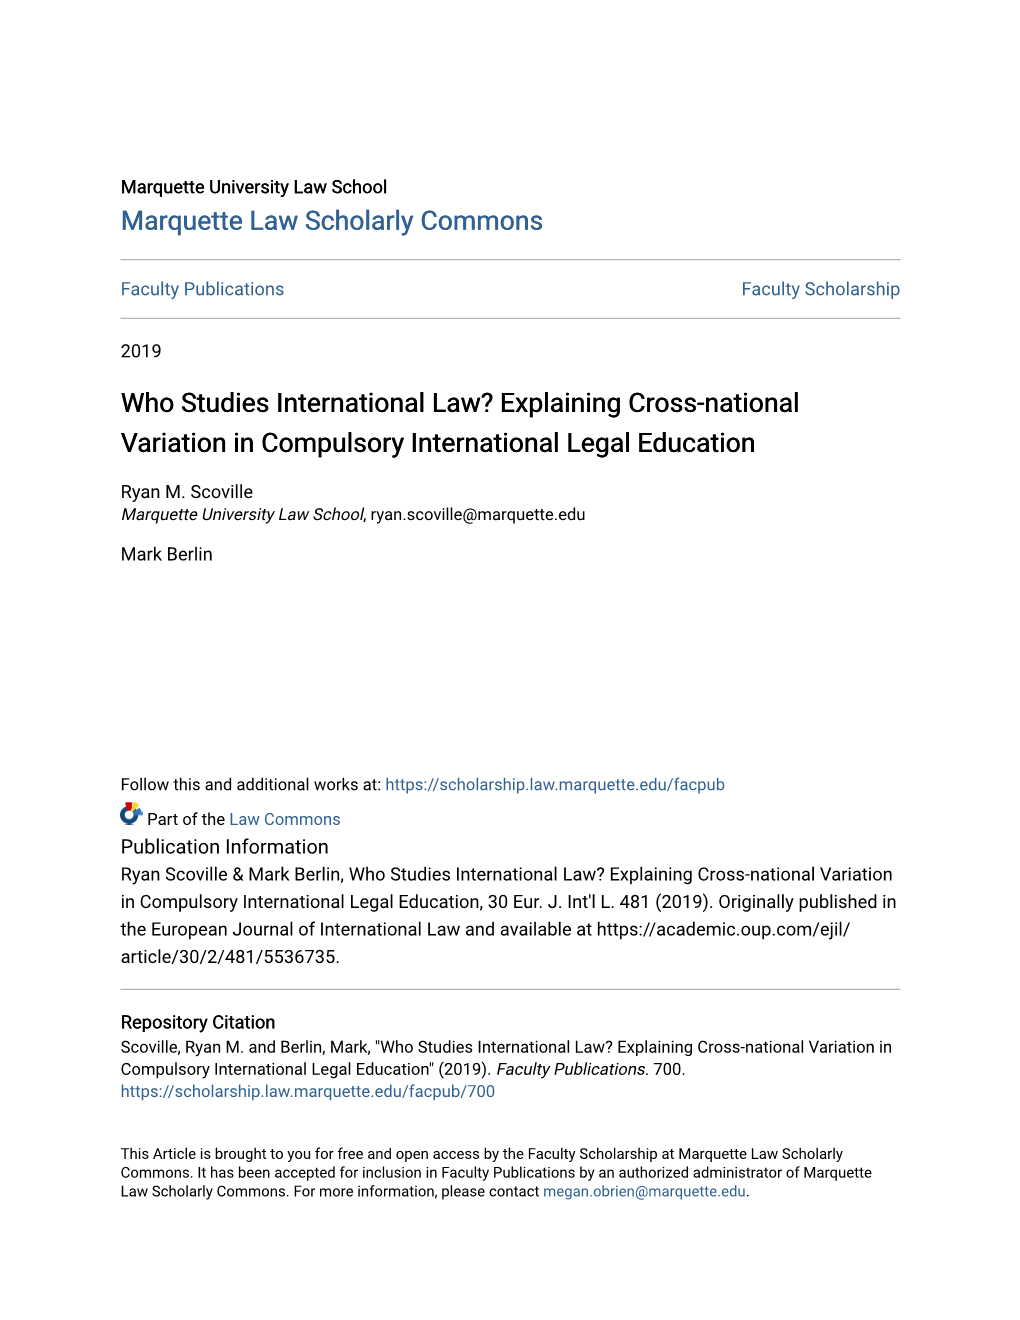 Explaining Cross-National Variation in Compulsory International Legal Education